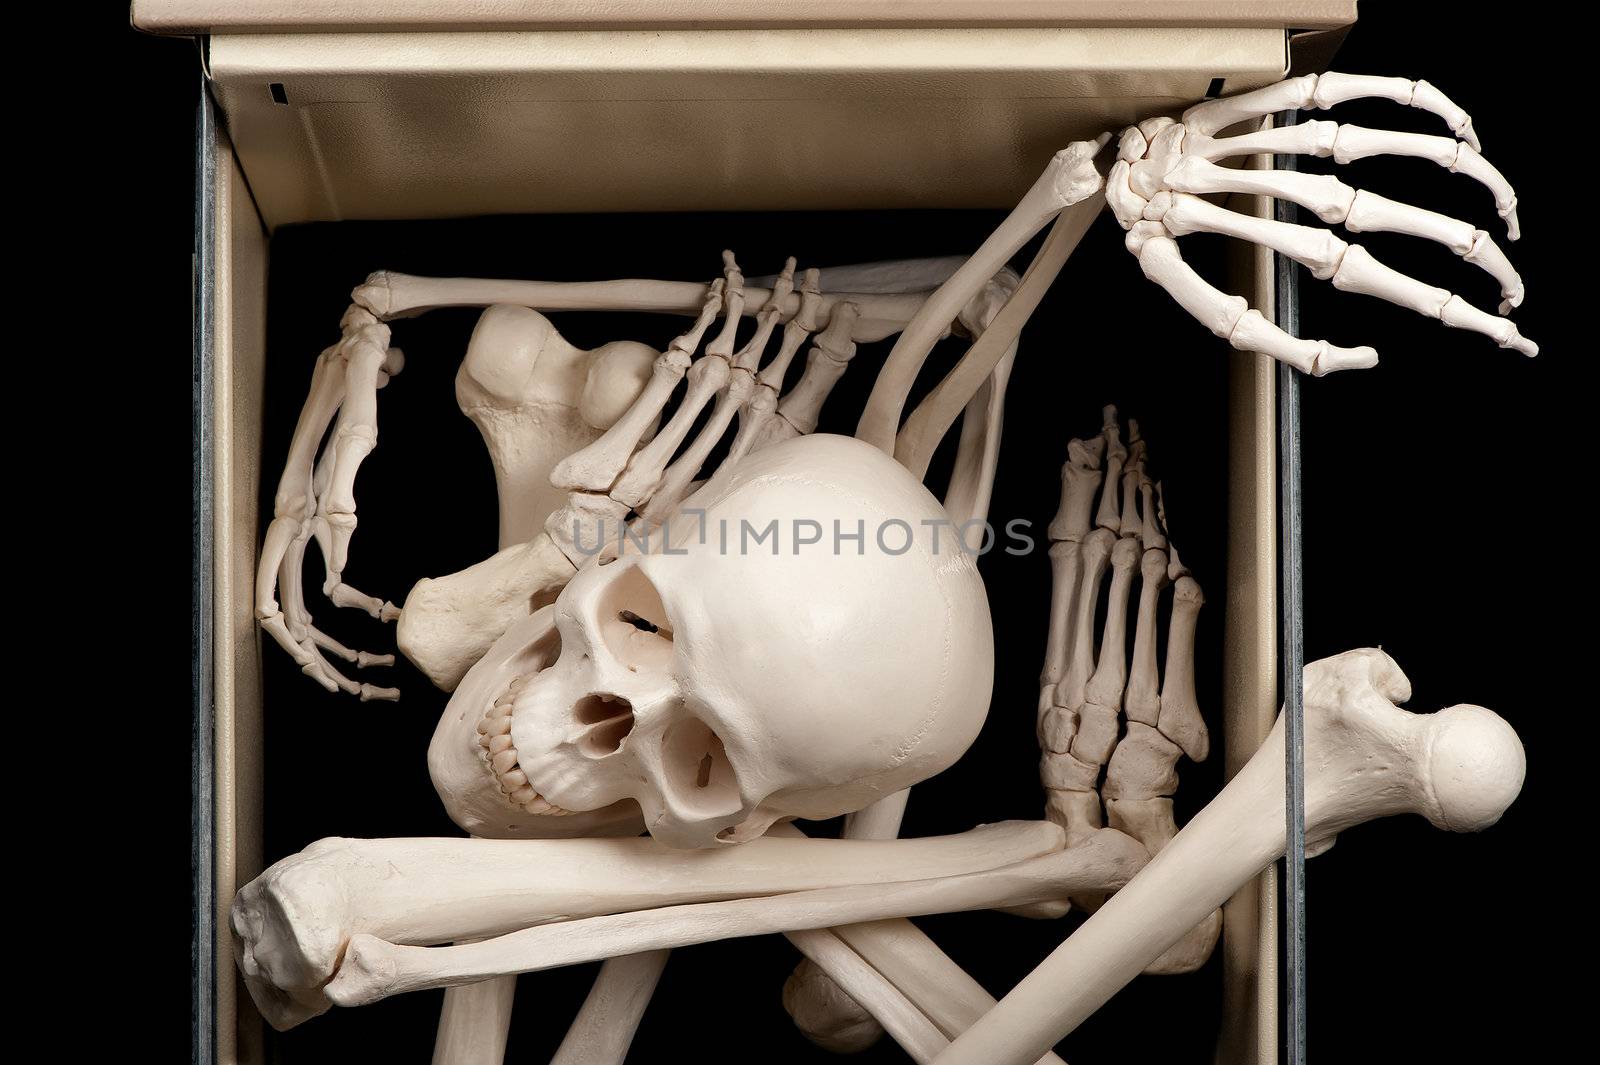 One open drawer reveals skeletal bones that were previously hidden.